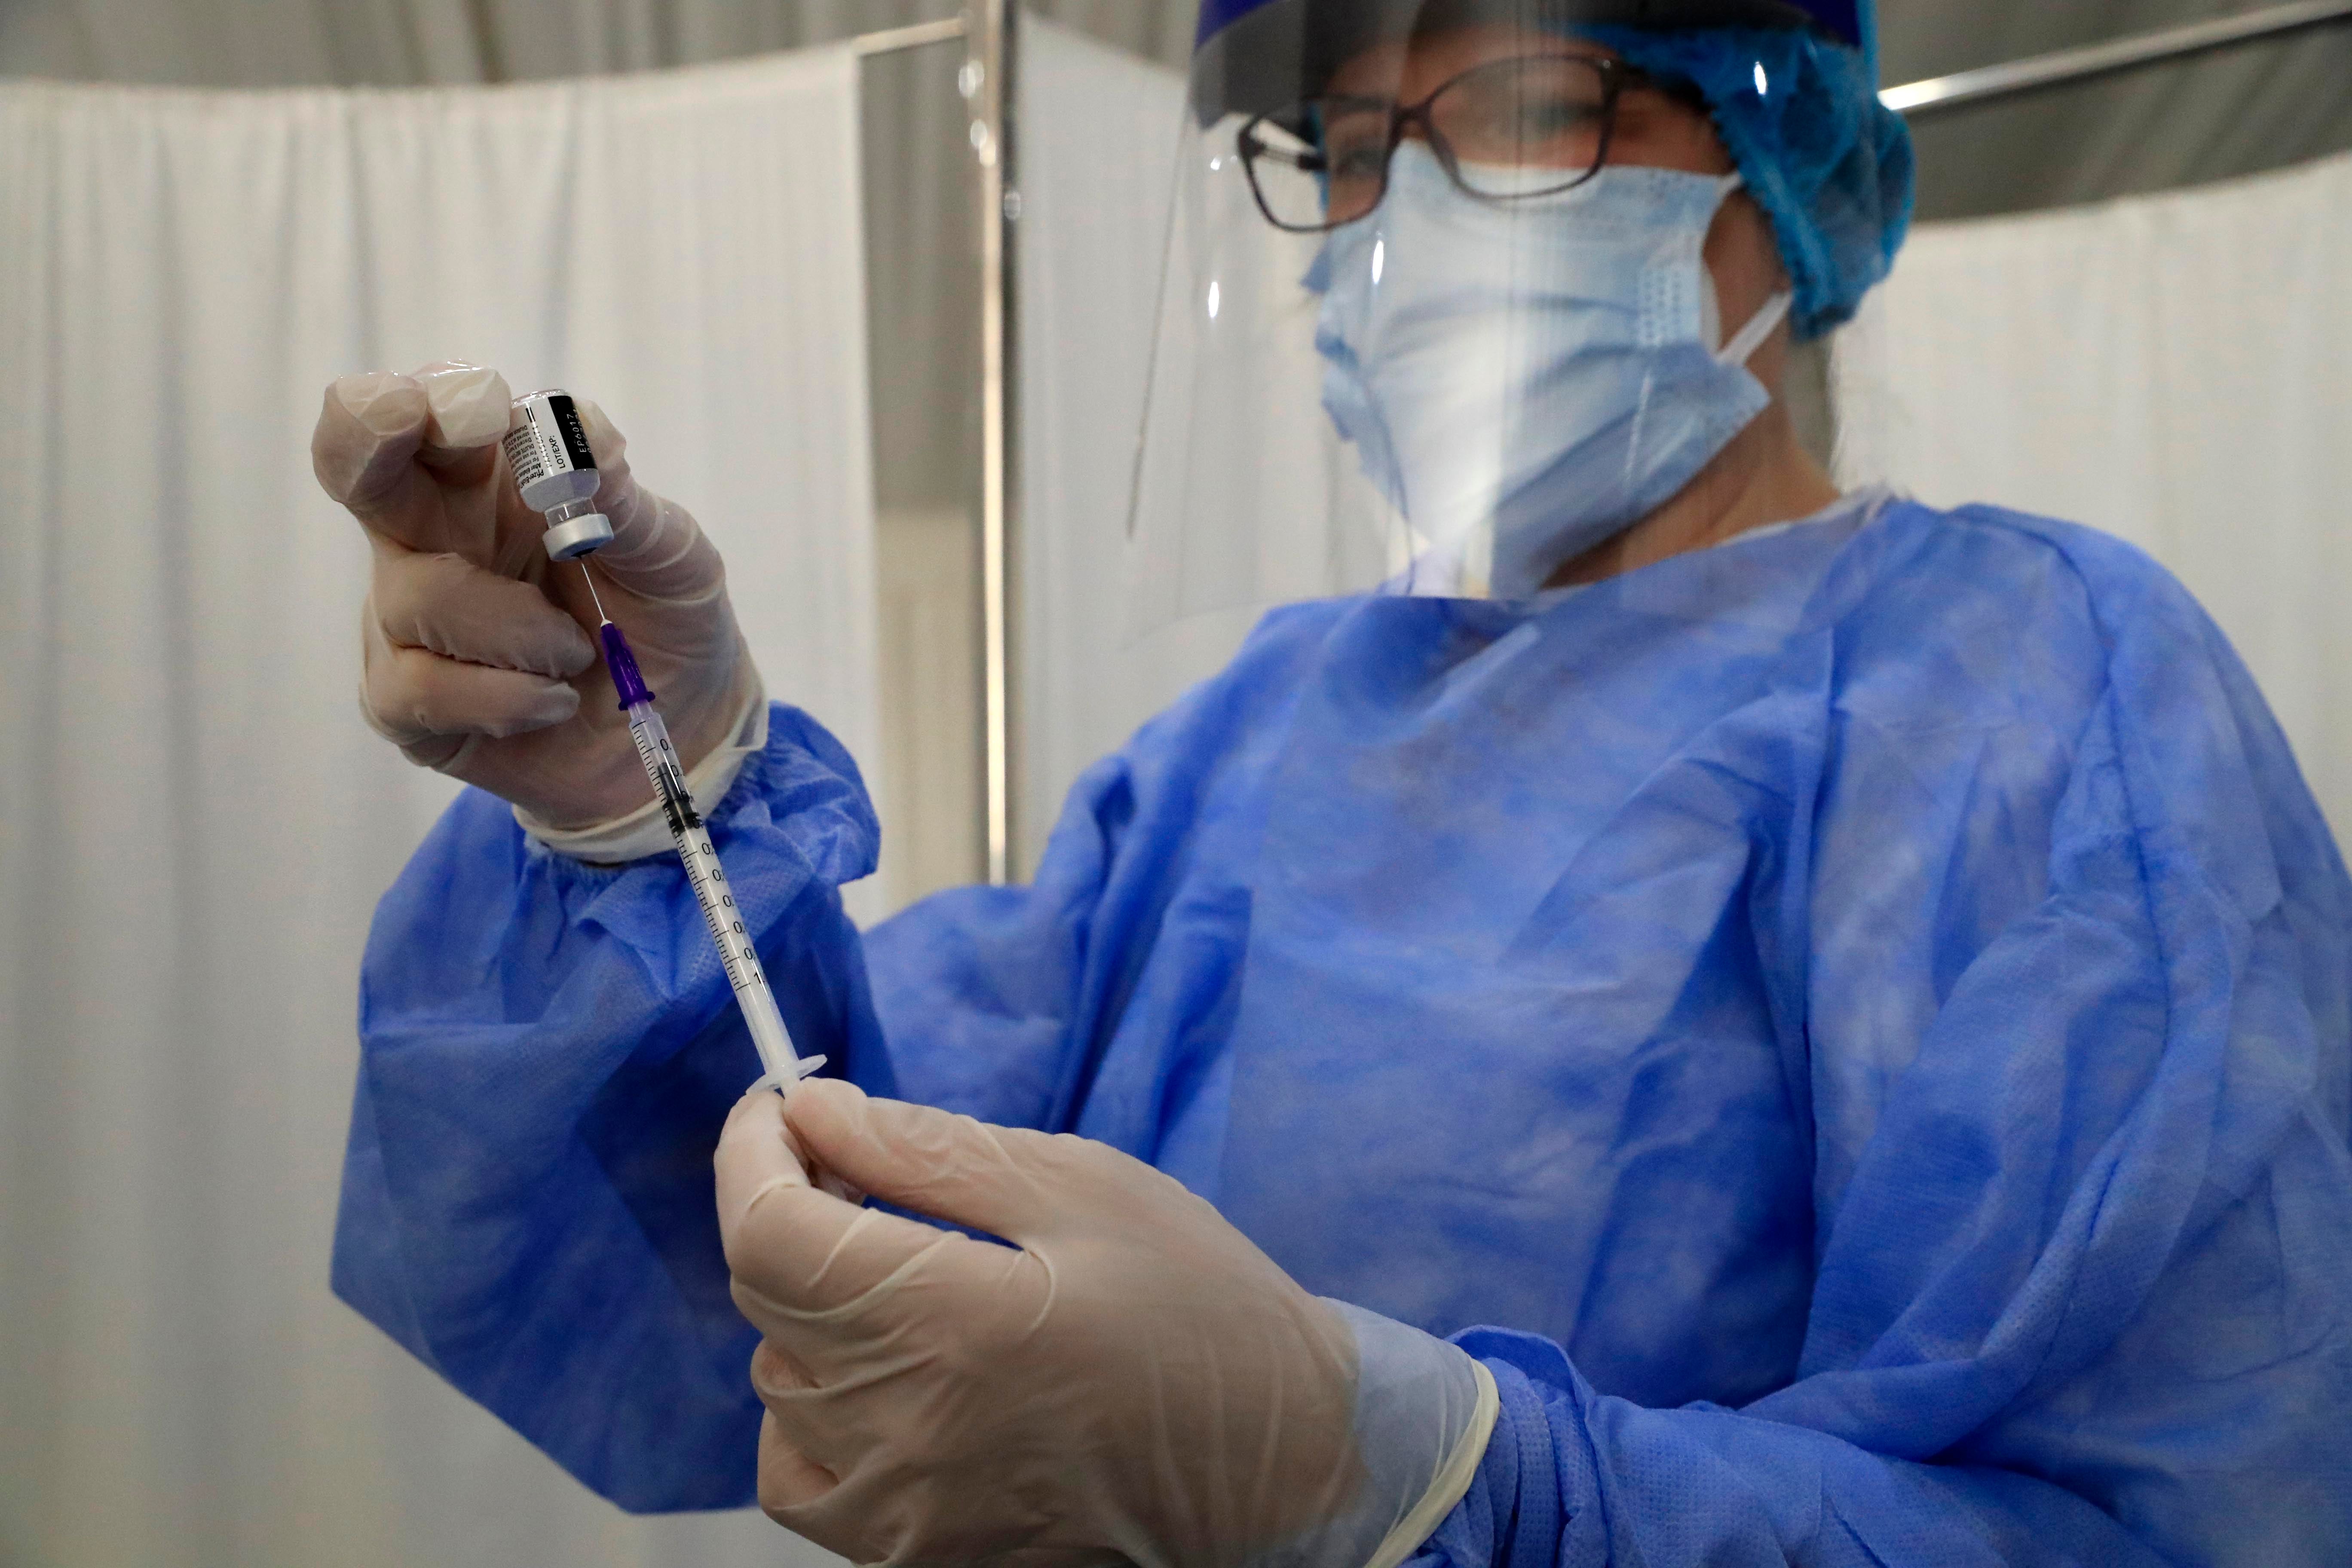 A nurse prepares a Covid-19 vaccine syringe at the Saint George Hospital in Beirut, Lebanon on February 16, 2021. © 2021 AP Photo/Hussein Malla